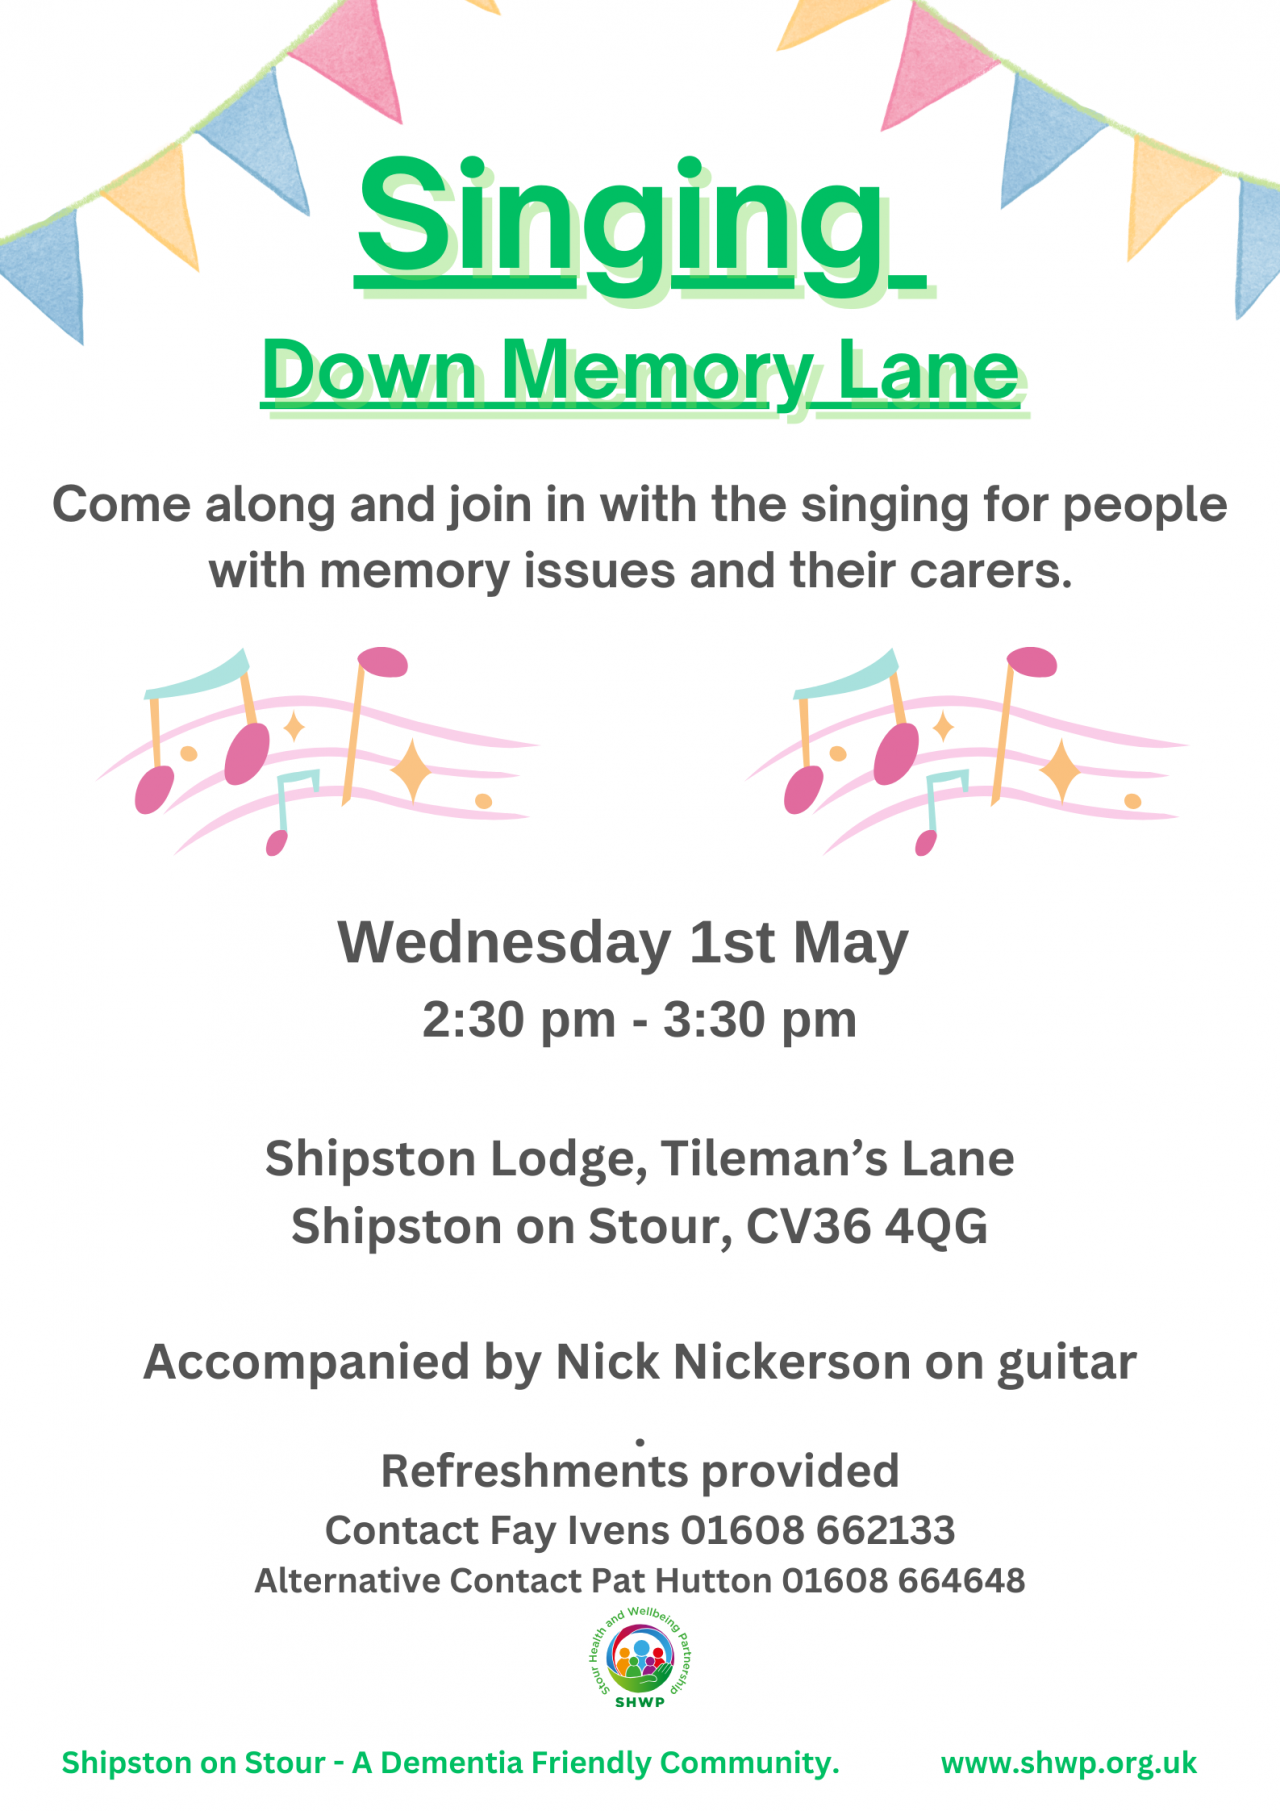 Down Memory Lane Singing at Shipston Lodge on Wednesday 1 May